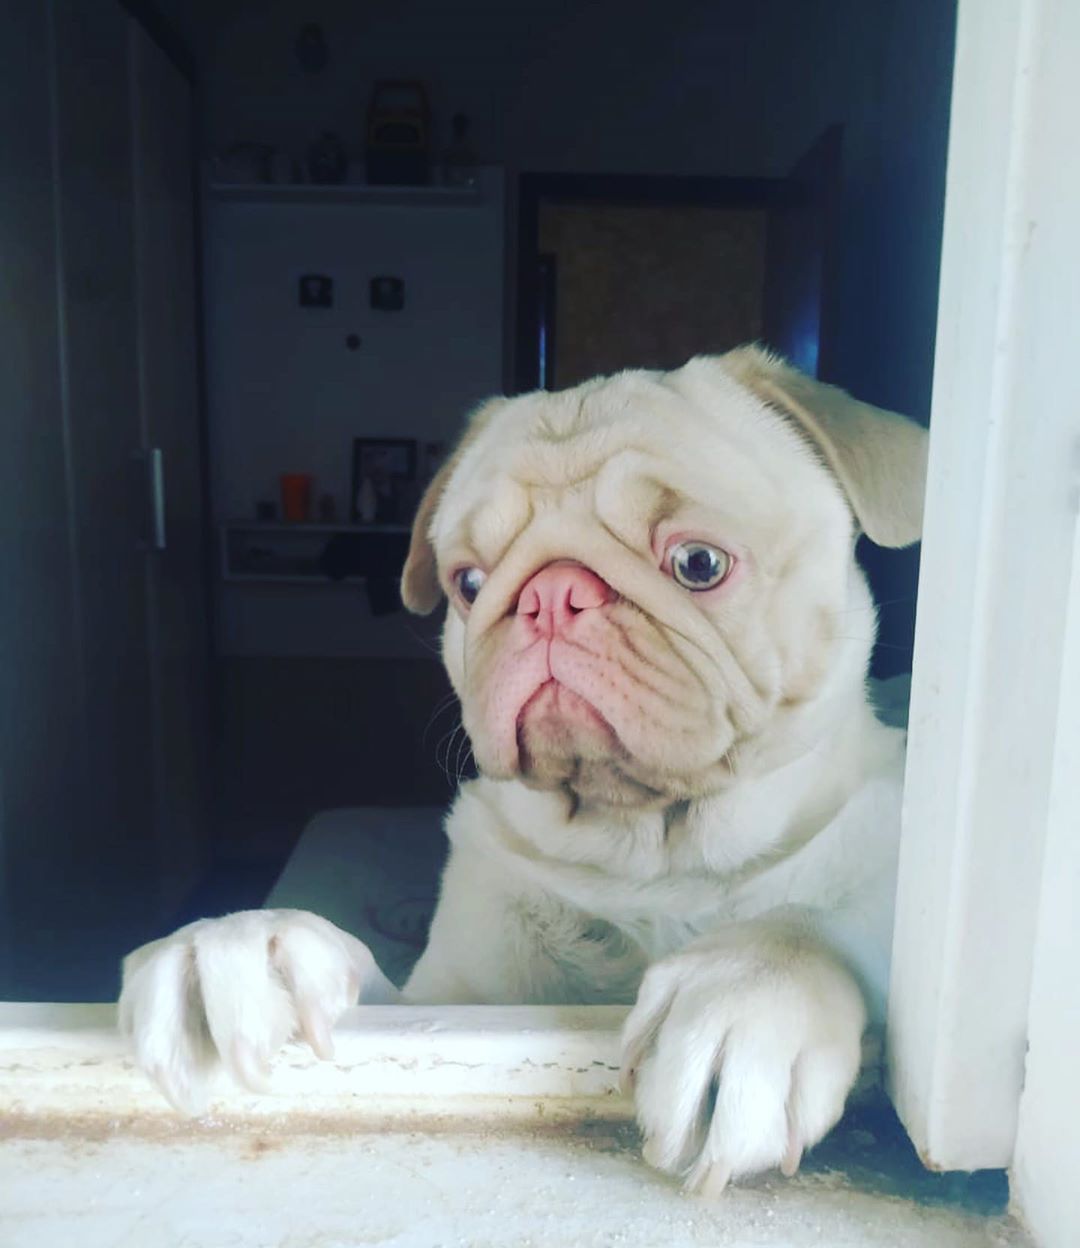 A sad Pug standing behind the window